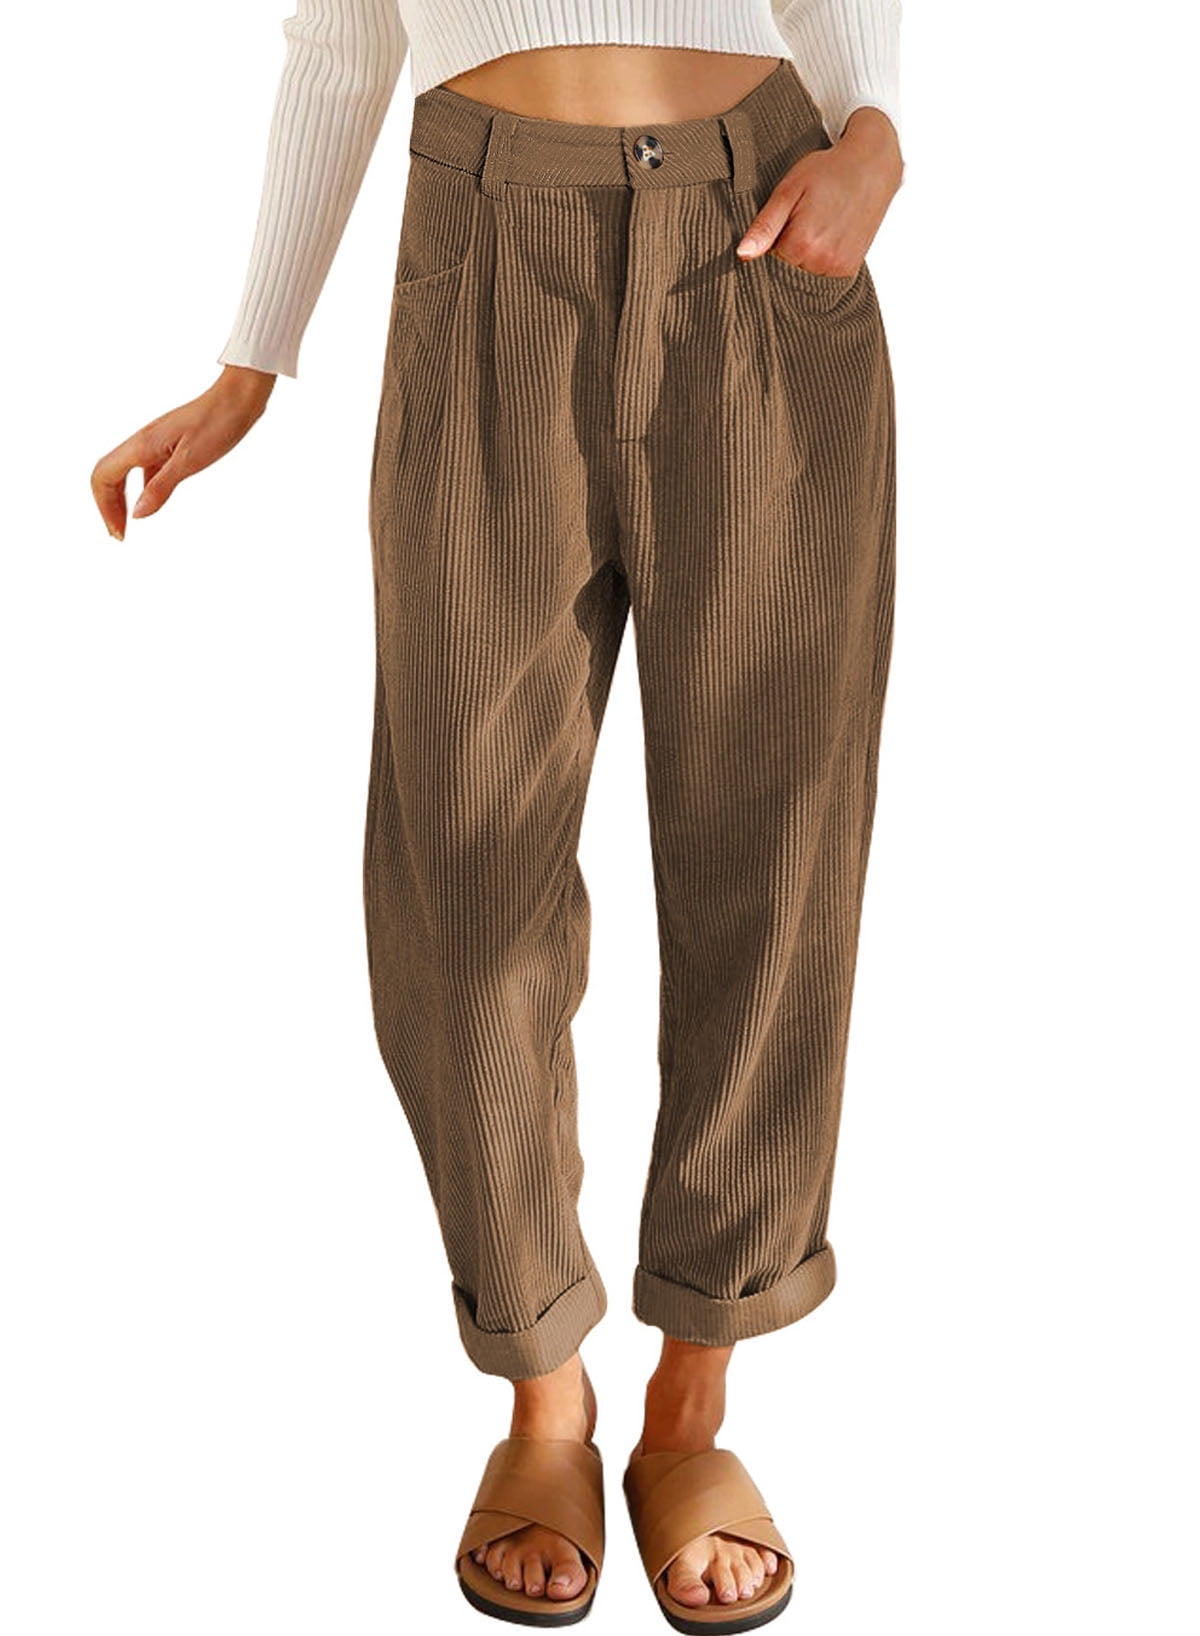 Wide corduroy trousers - Light brown - Ladies | H&M IN